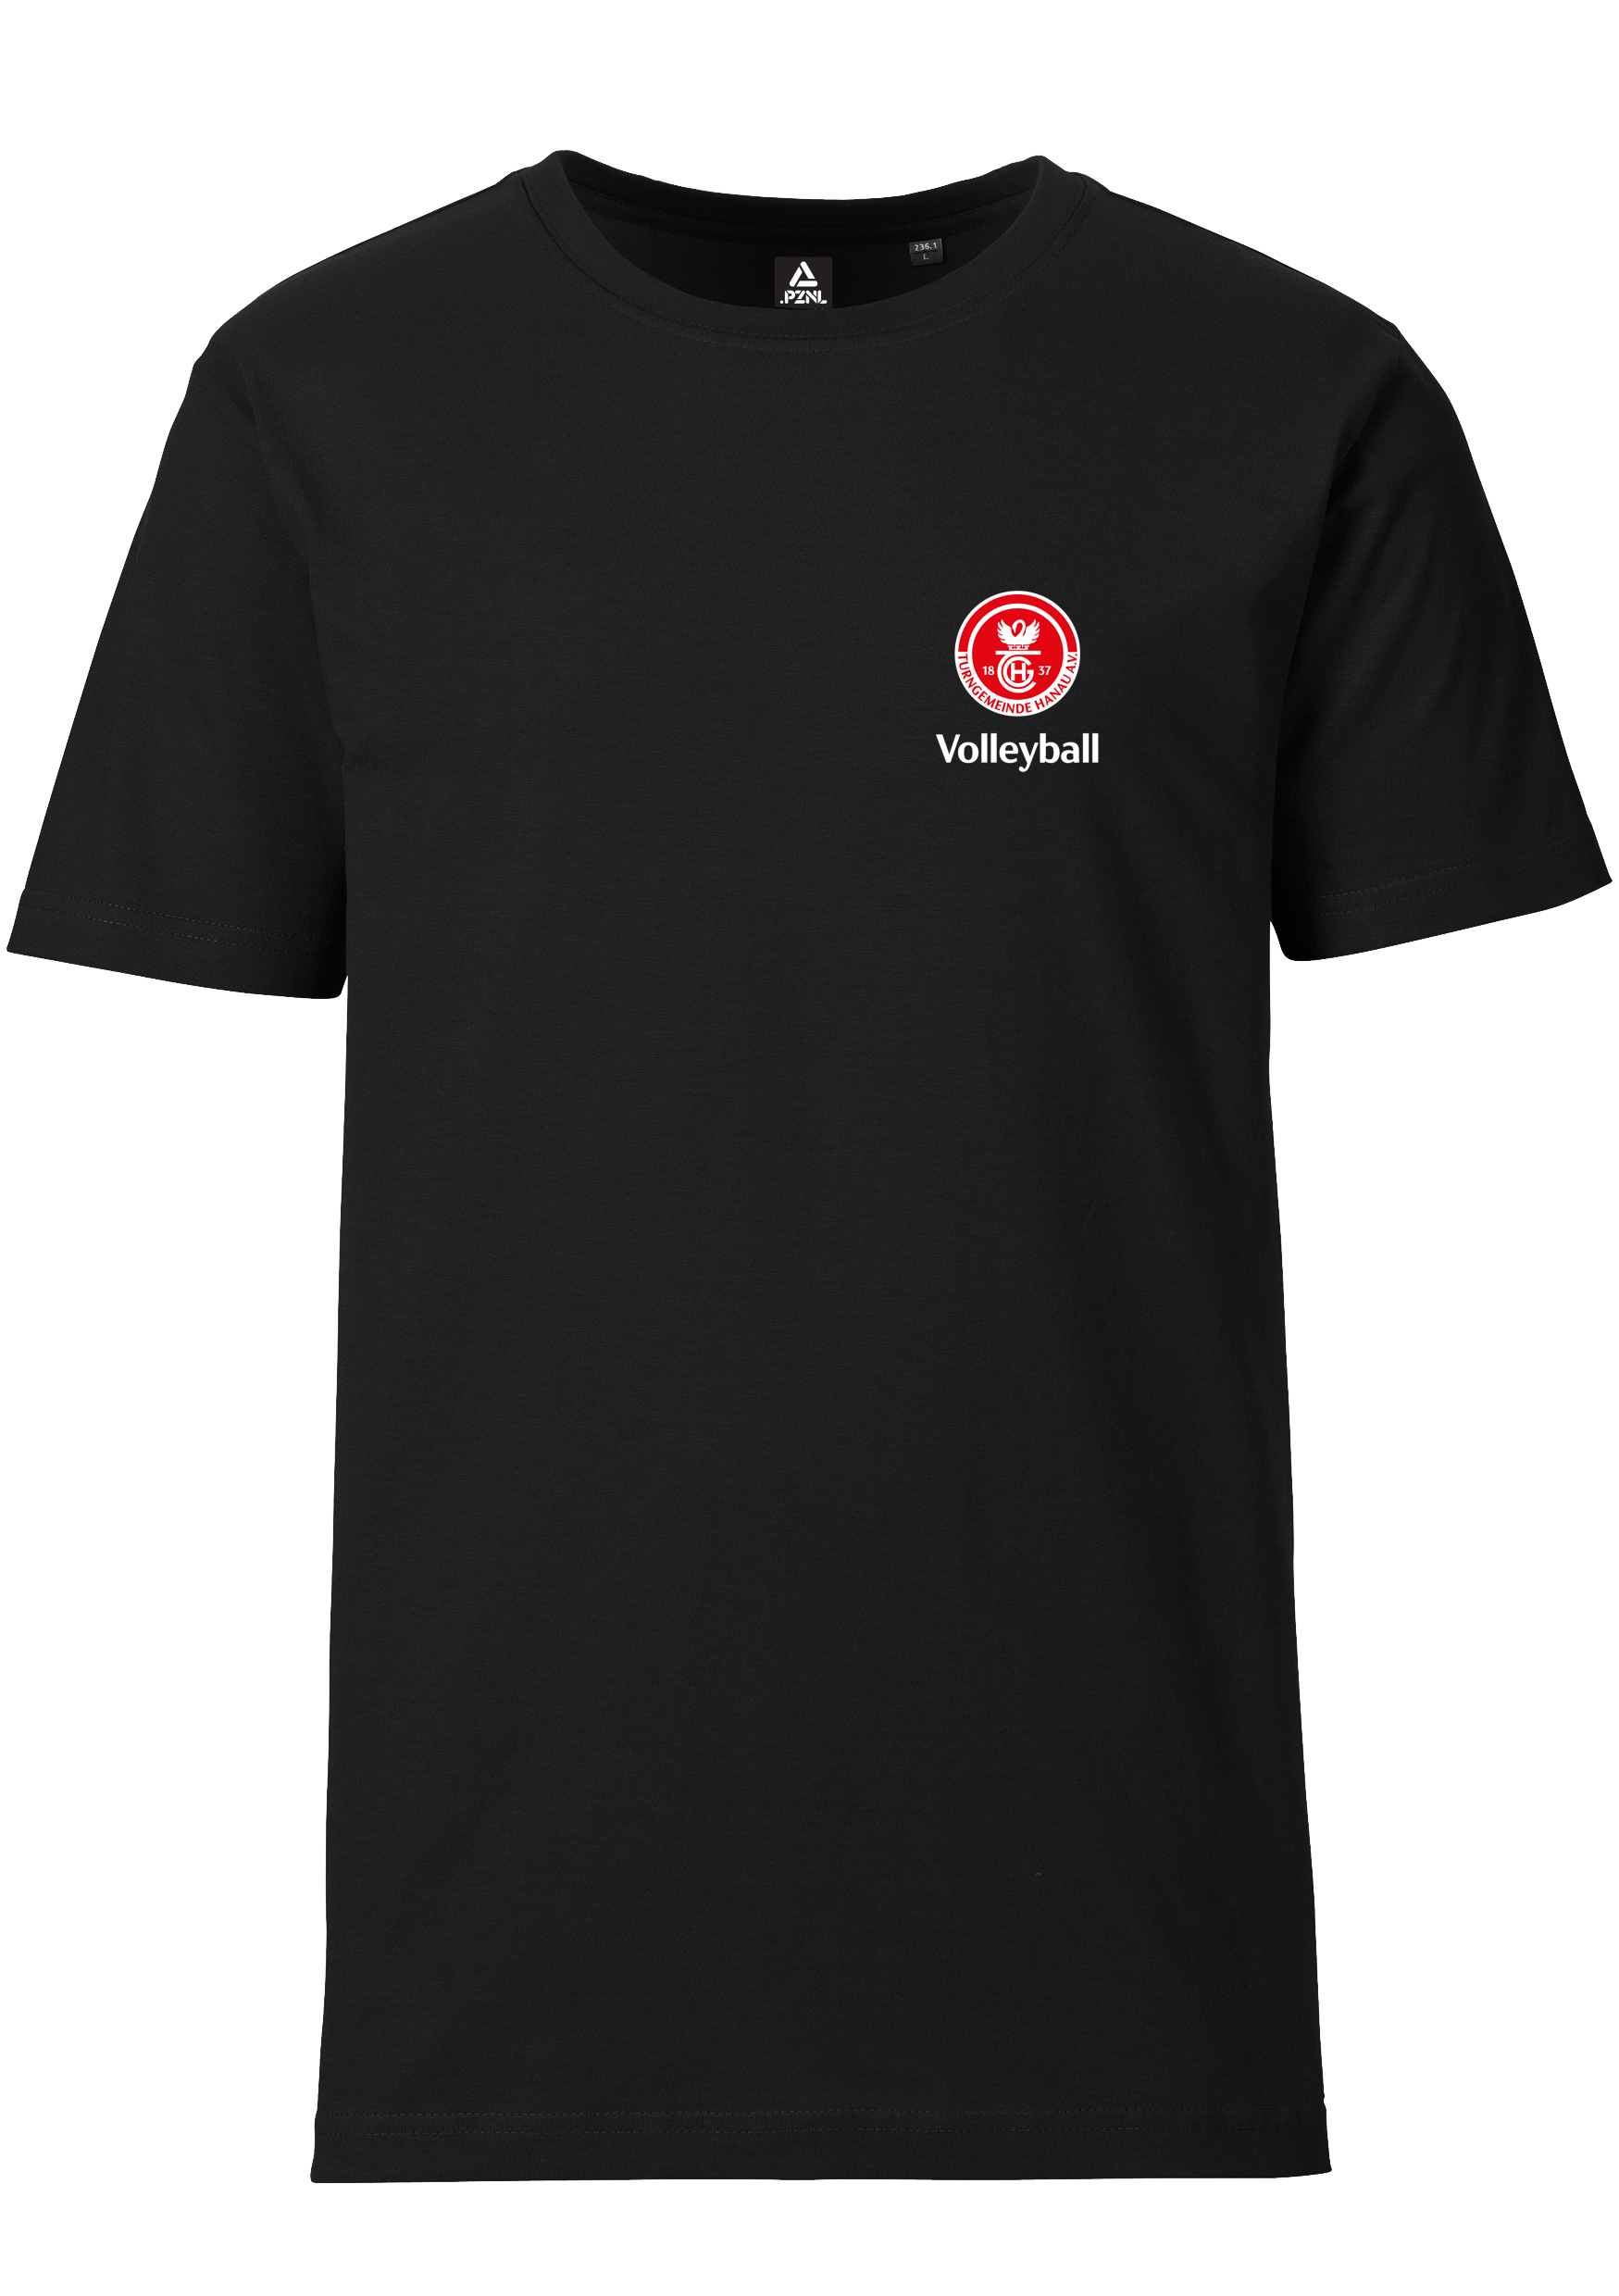 TG Hanau Volleyball Logo T-Shirt